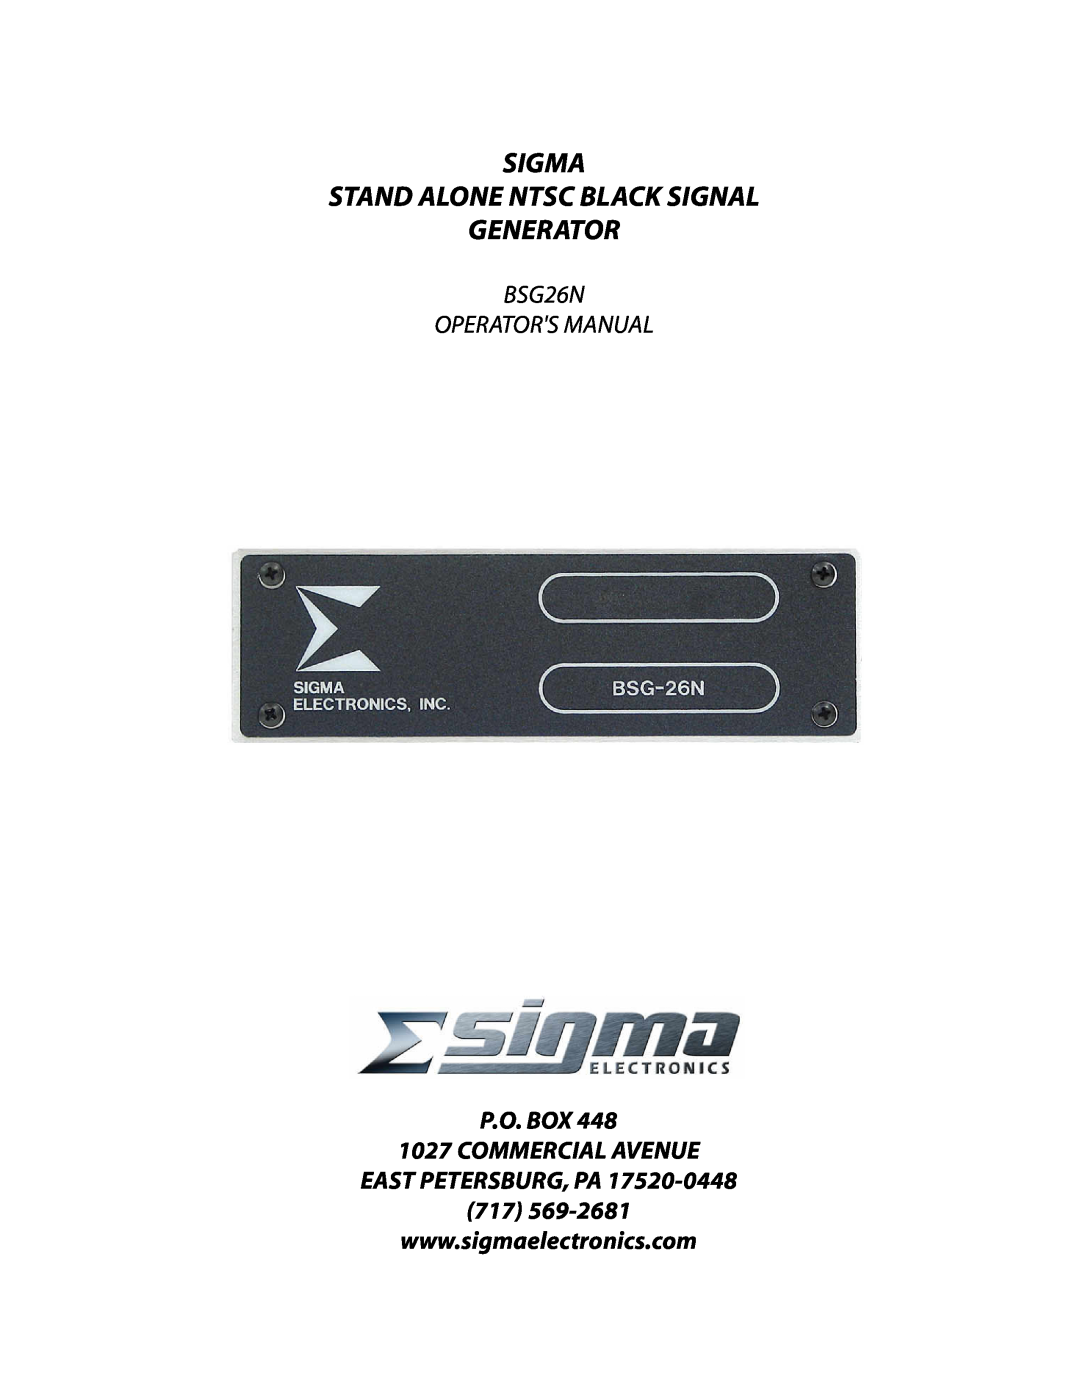 Sigma manual Sigma Stand Alone Ntsc Black Signal Generator, BSG26N OPERATORS MANUAL, P.O. BOX 1027 COMMERCIAL AVENUE 